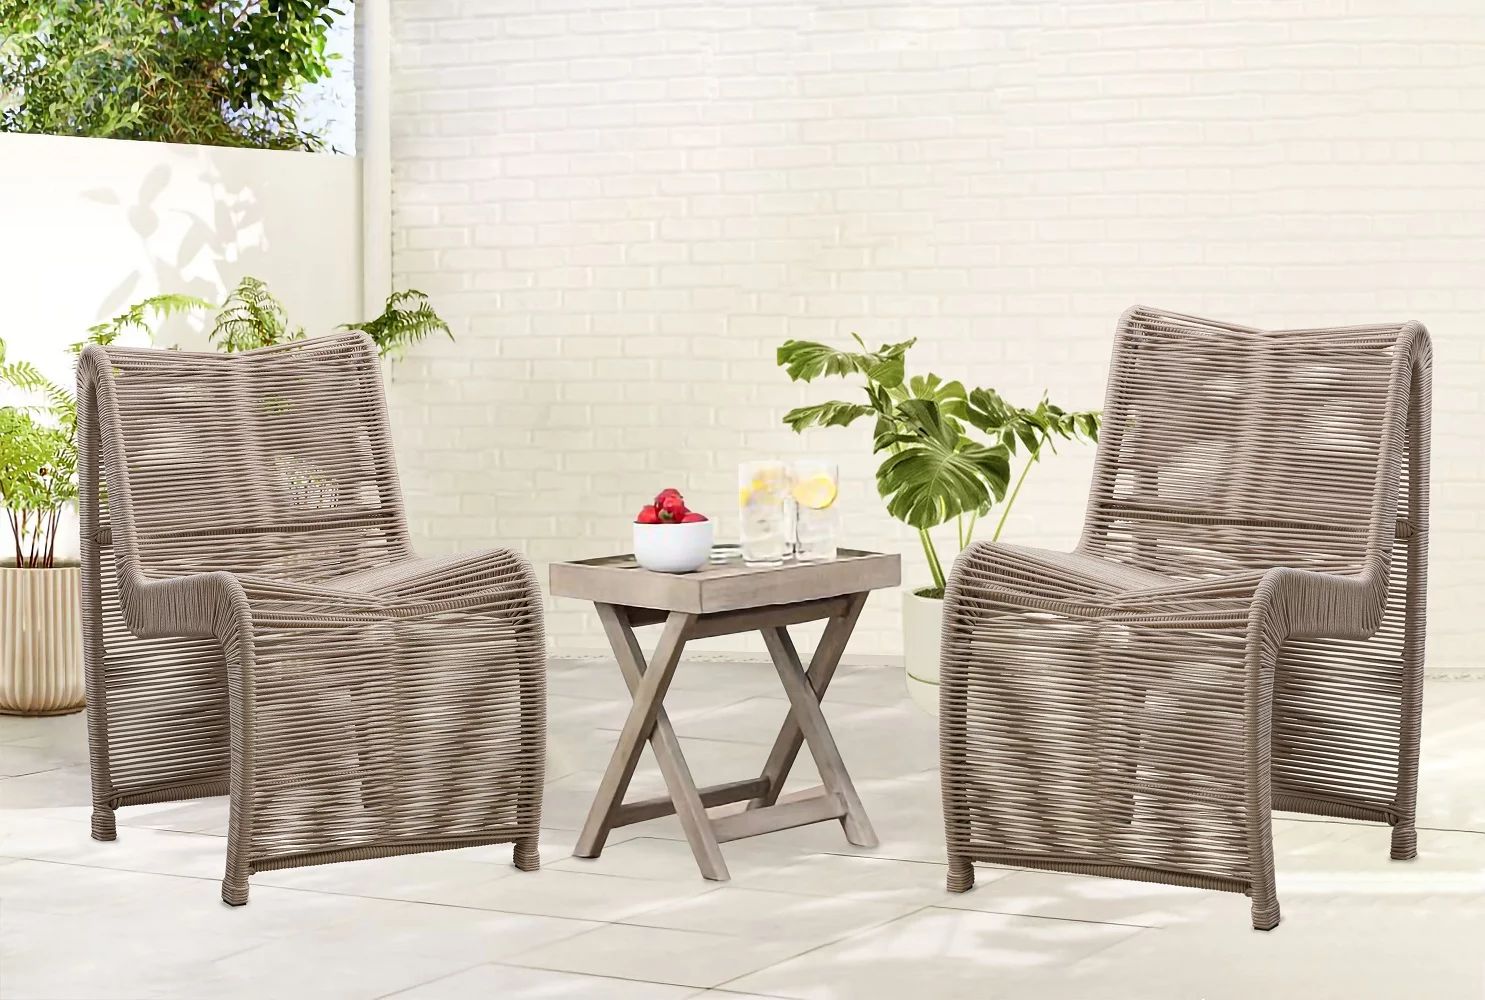 Lorenzo Rope Outdoor Patio Chairs, Set of 2 - Tan | Walmart (US)